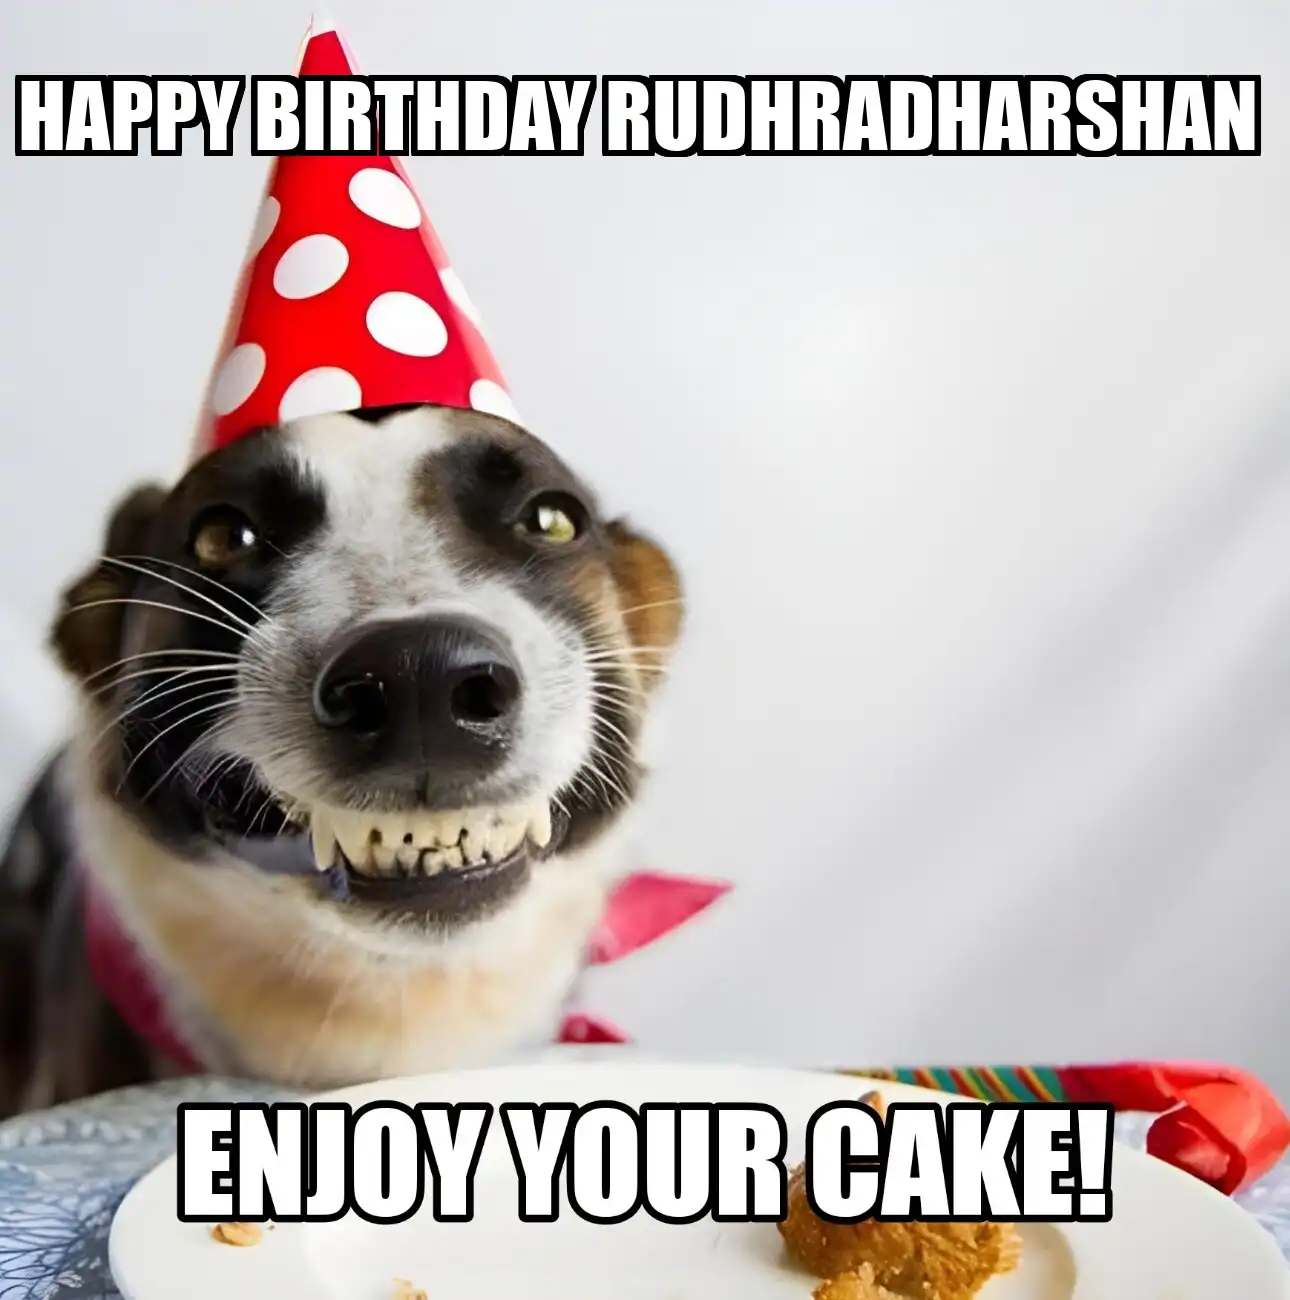 Happy Birthday Rudhradharshan Enjoy Your Cake Dog Meme